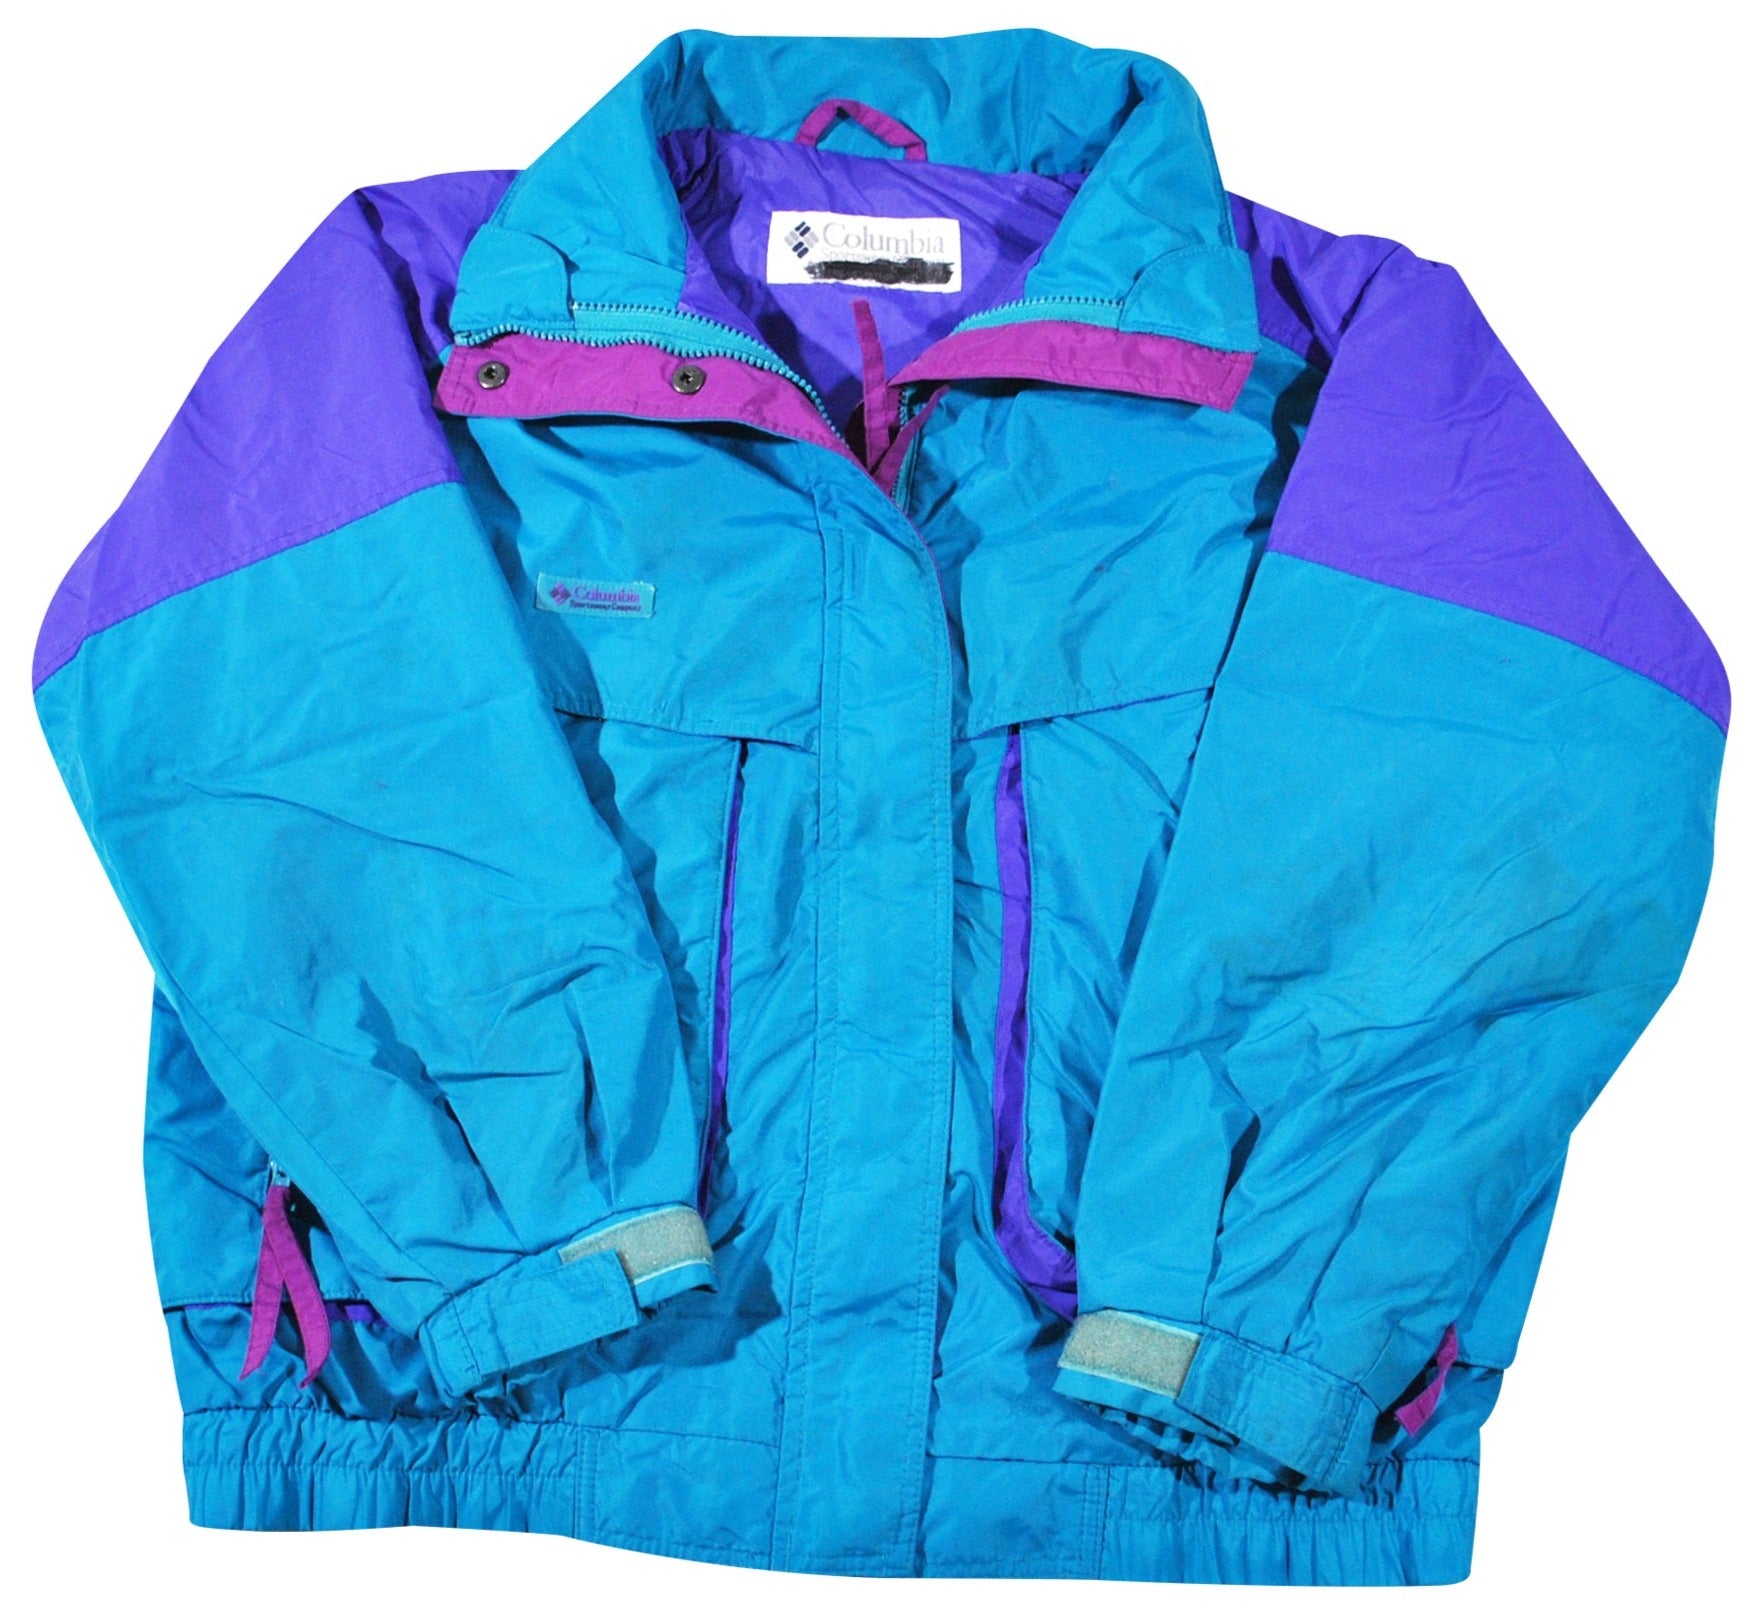 Vintage Columbia Jacket Womens XL Purple Reversible Ski Outdoors